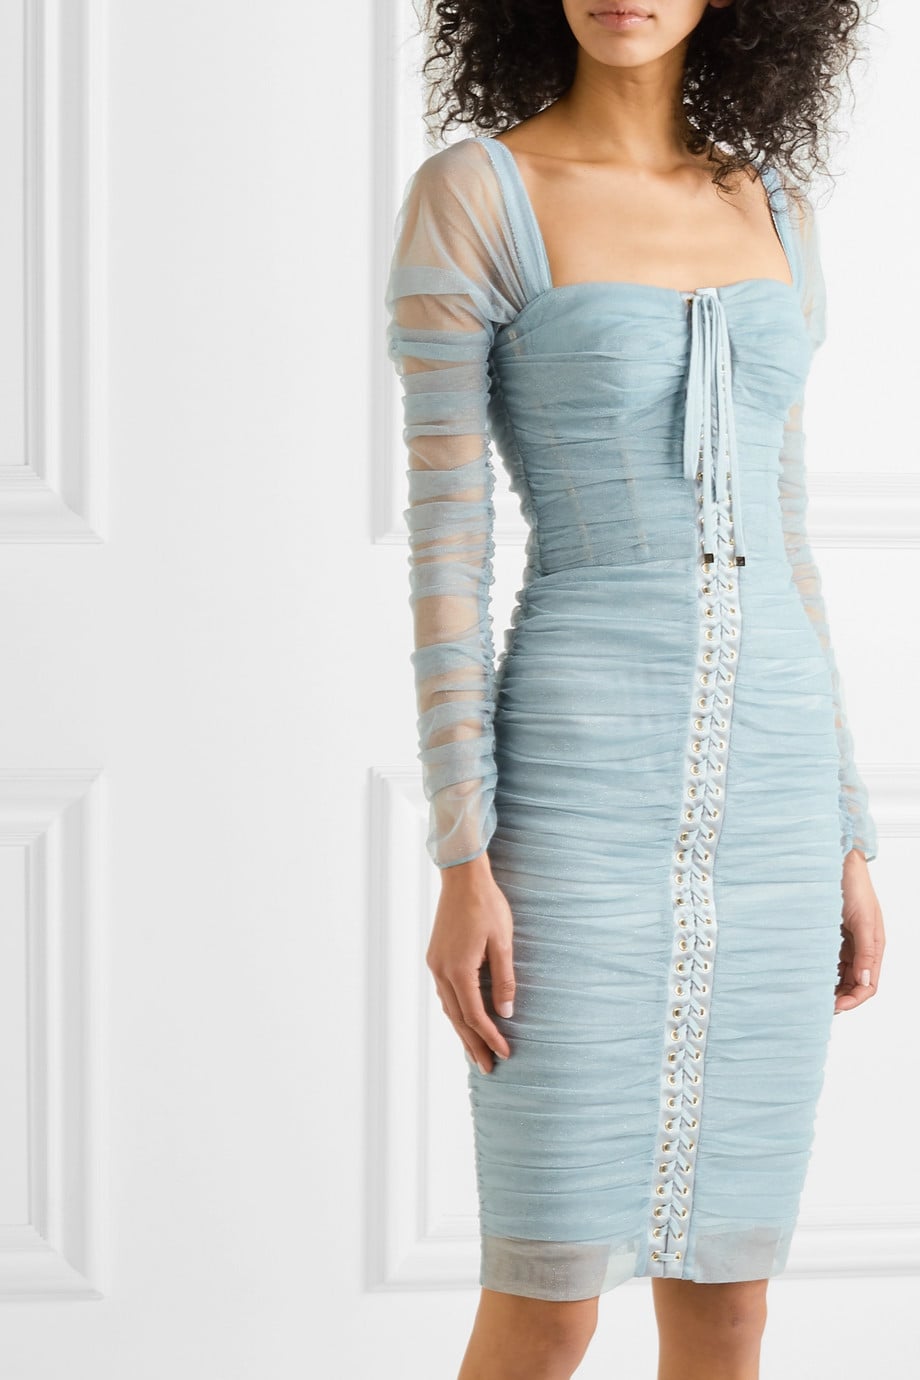 Dolce & Gabbana Ruched Metallic Dress | Swift's Baby Blue Minidress Make Your Eyes "Turn Into Hearts" | POPSUGAR Fashion Photo 12